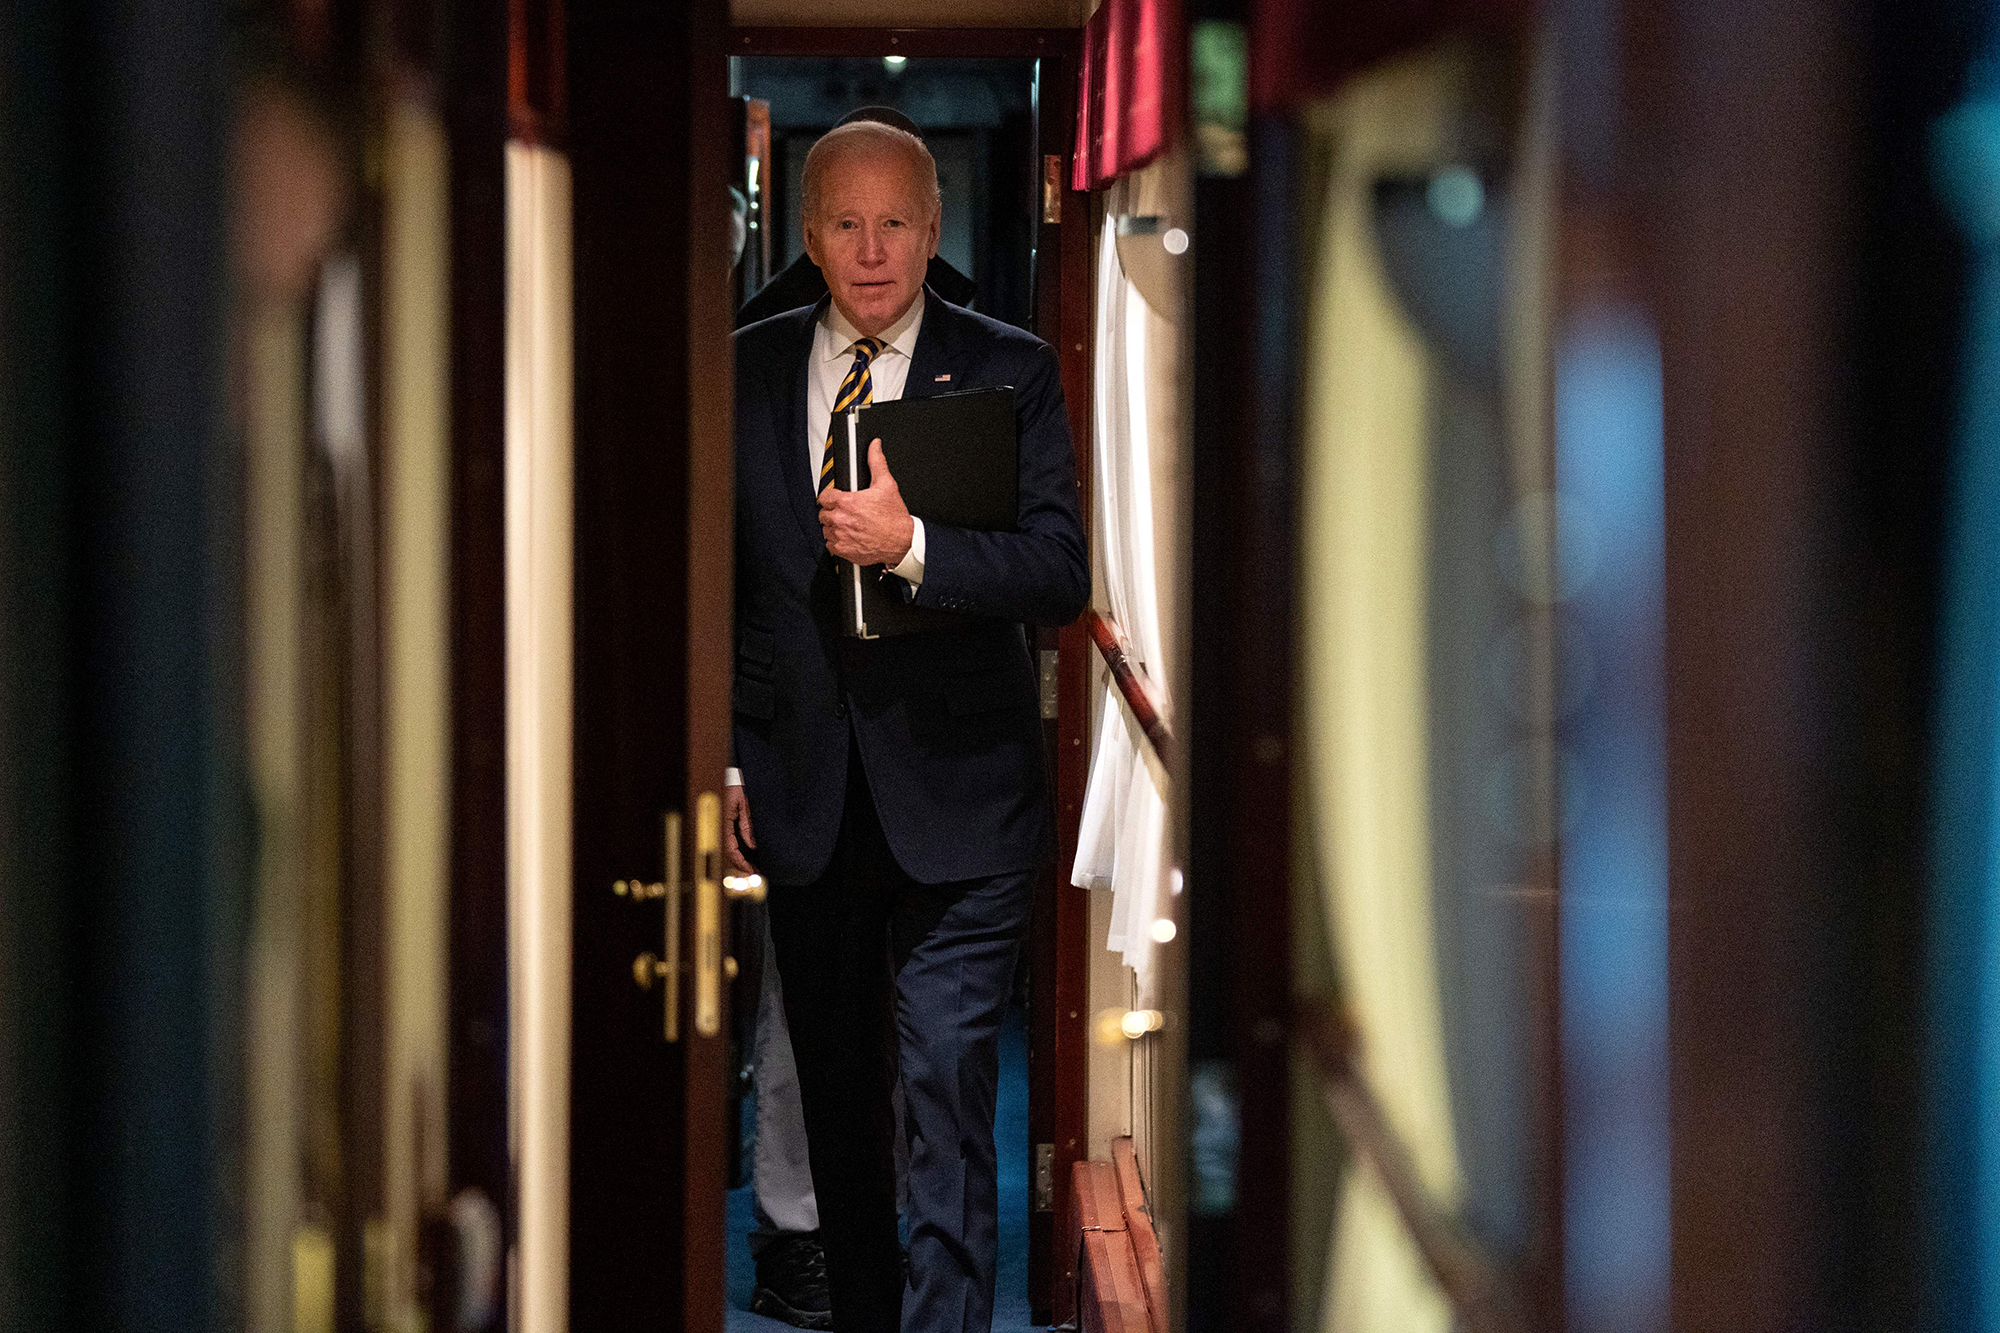 US President Joe Biden walks down a train corridor to his cabin after a surprise visit with Ukrainian President Volodymyr Zelensky in Kyiv on February 20.